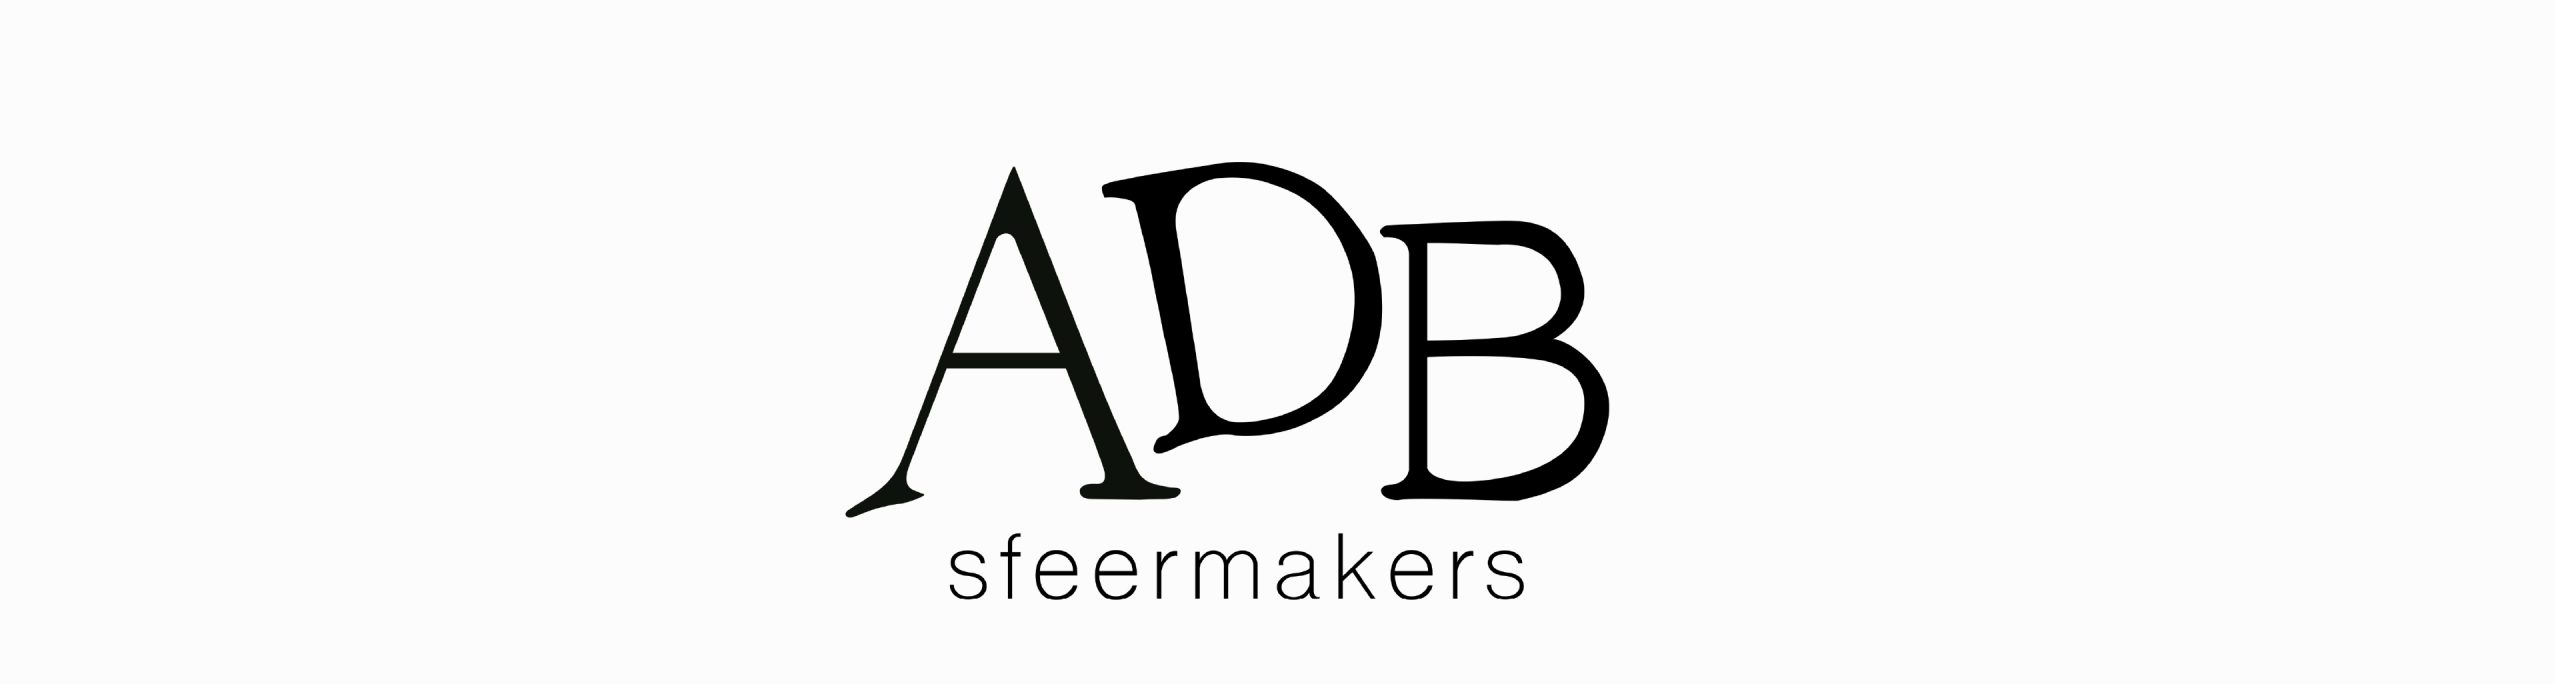 ADB Sfeermakers logo